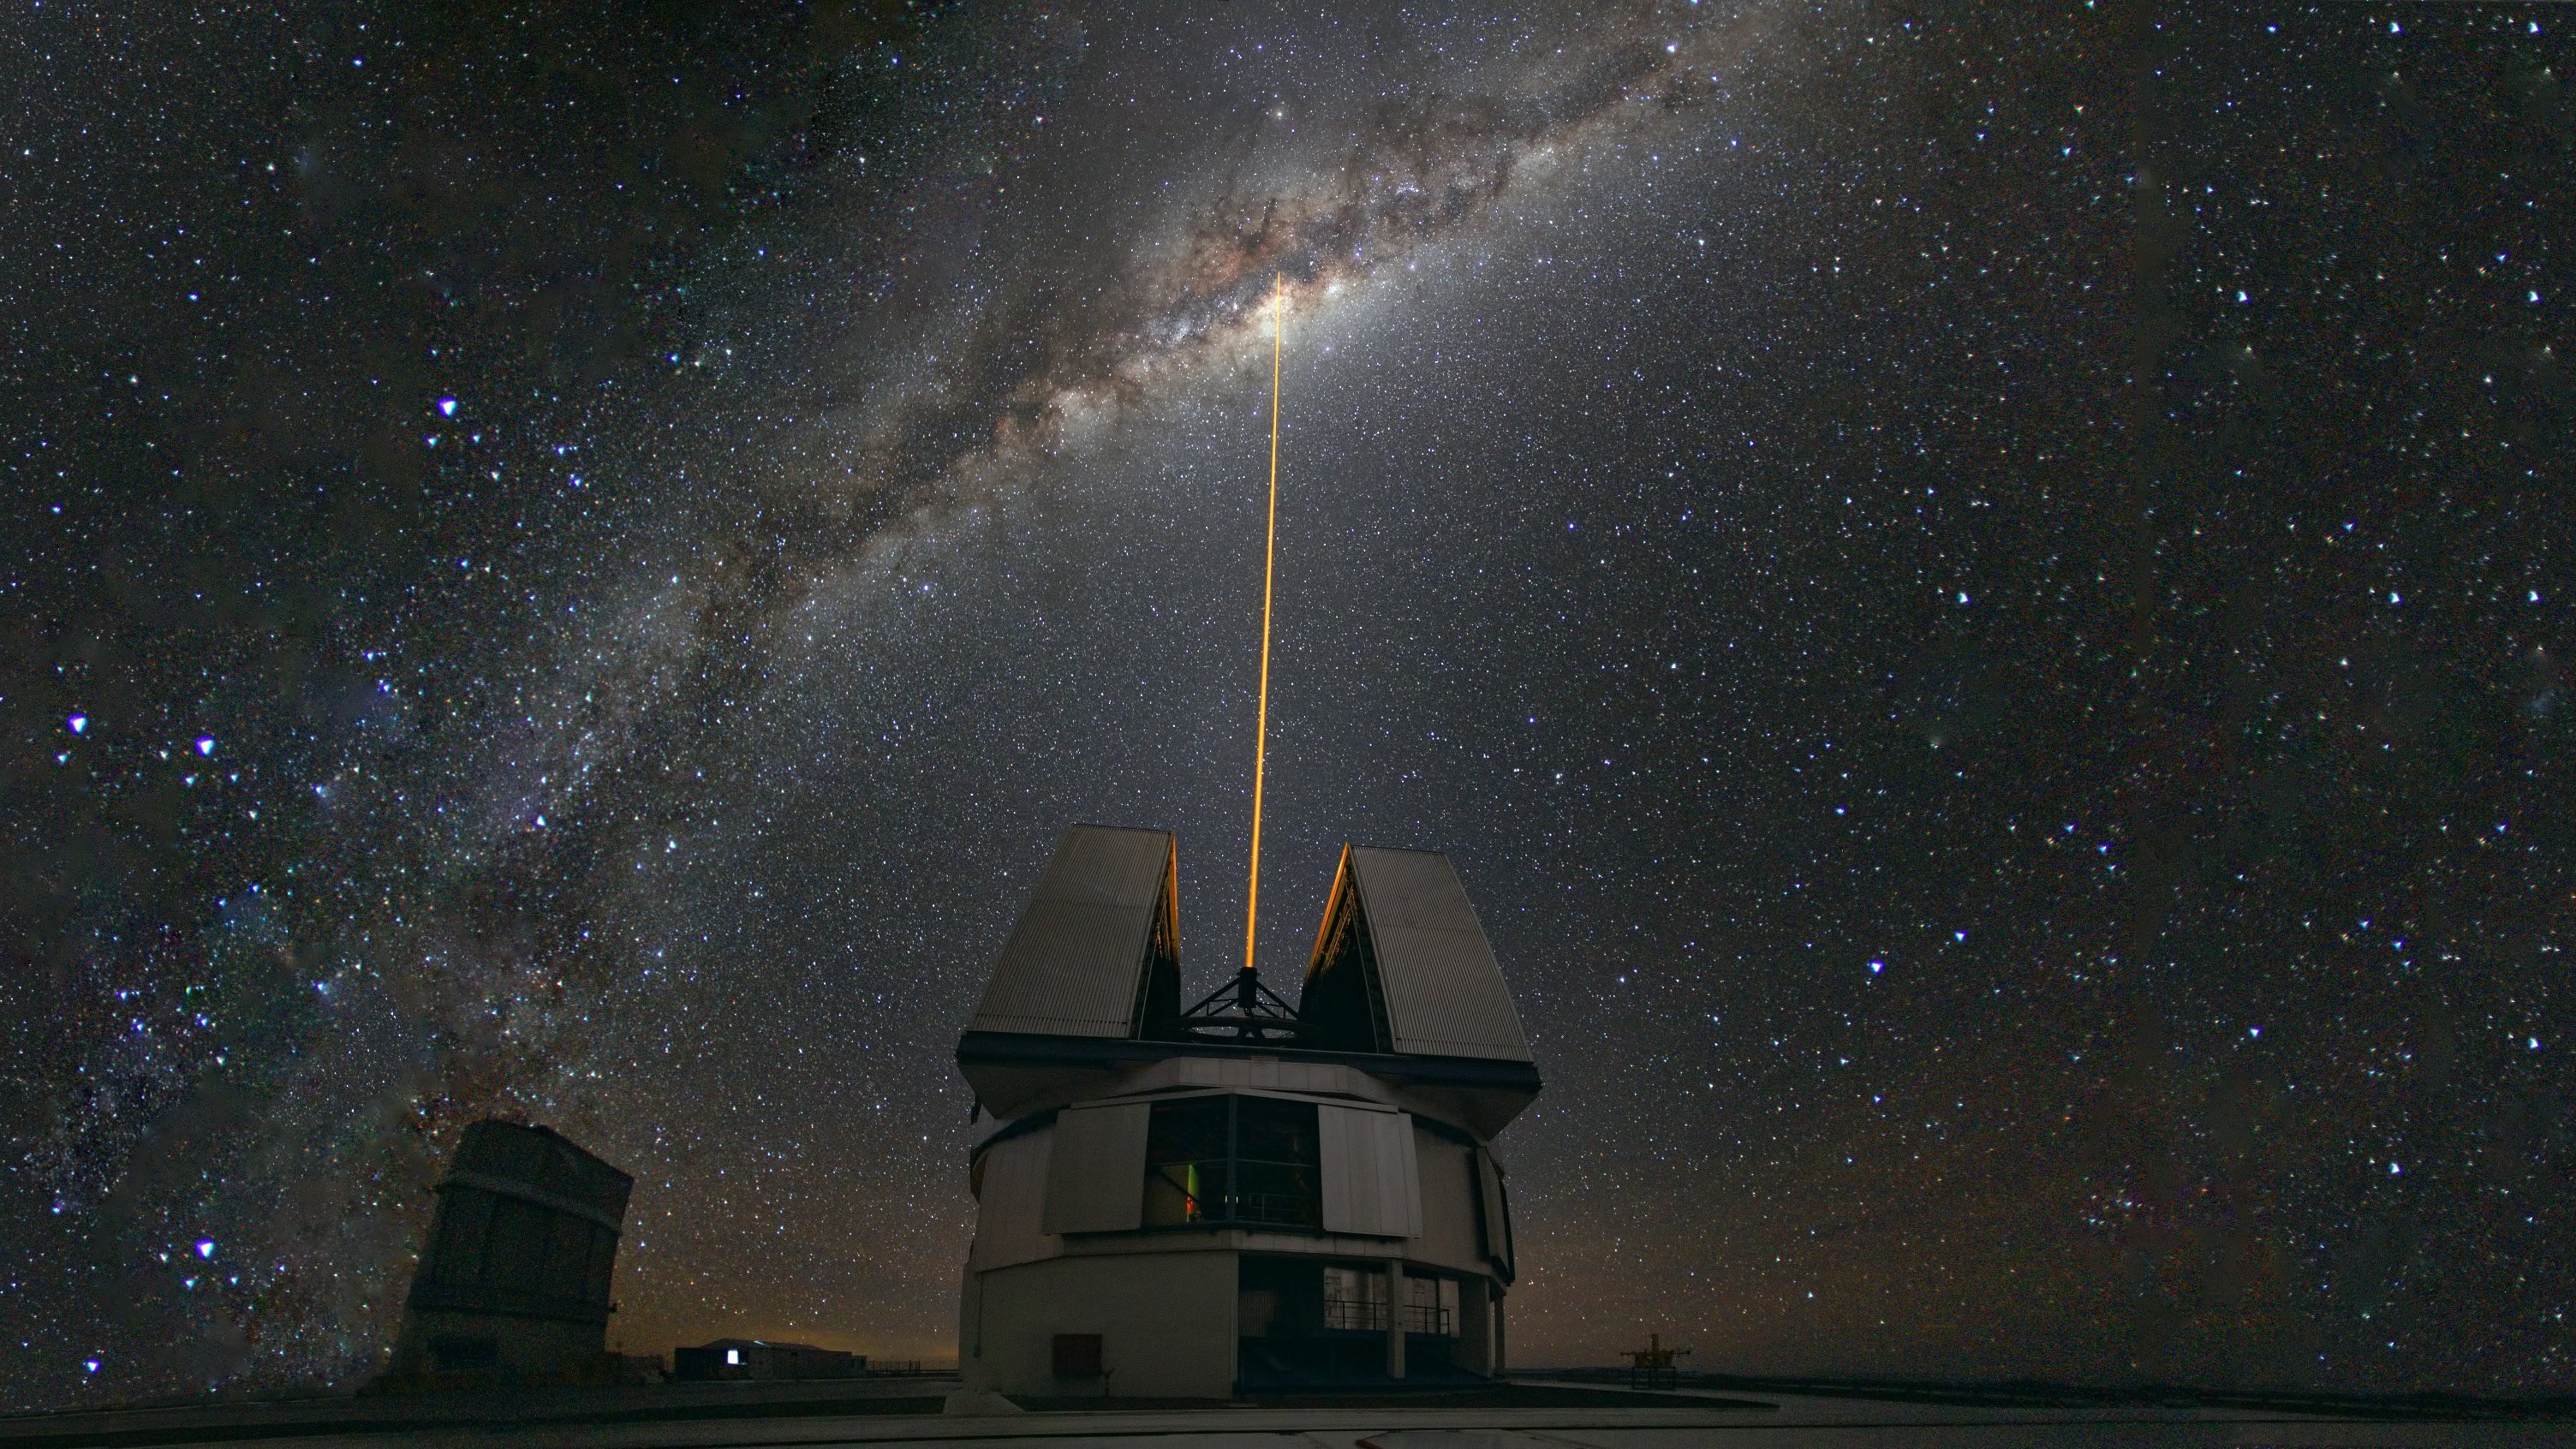 Звездное небо в телескоп